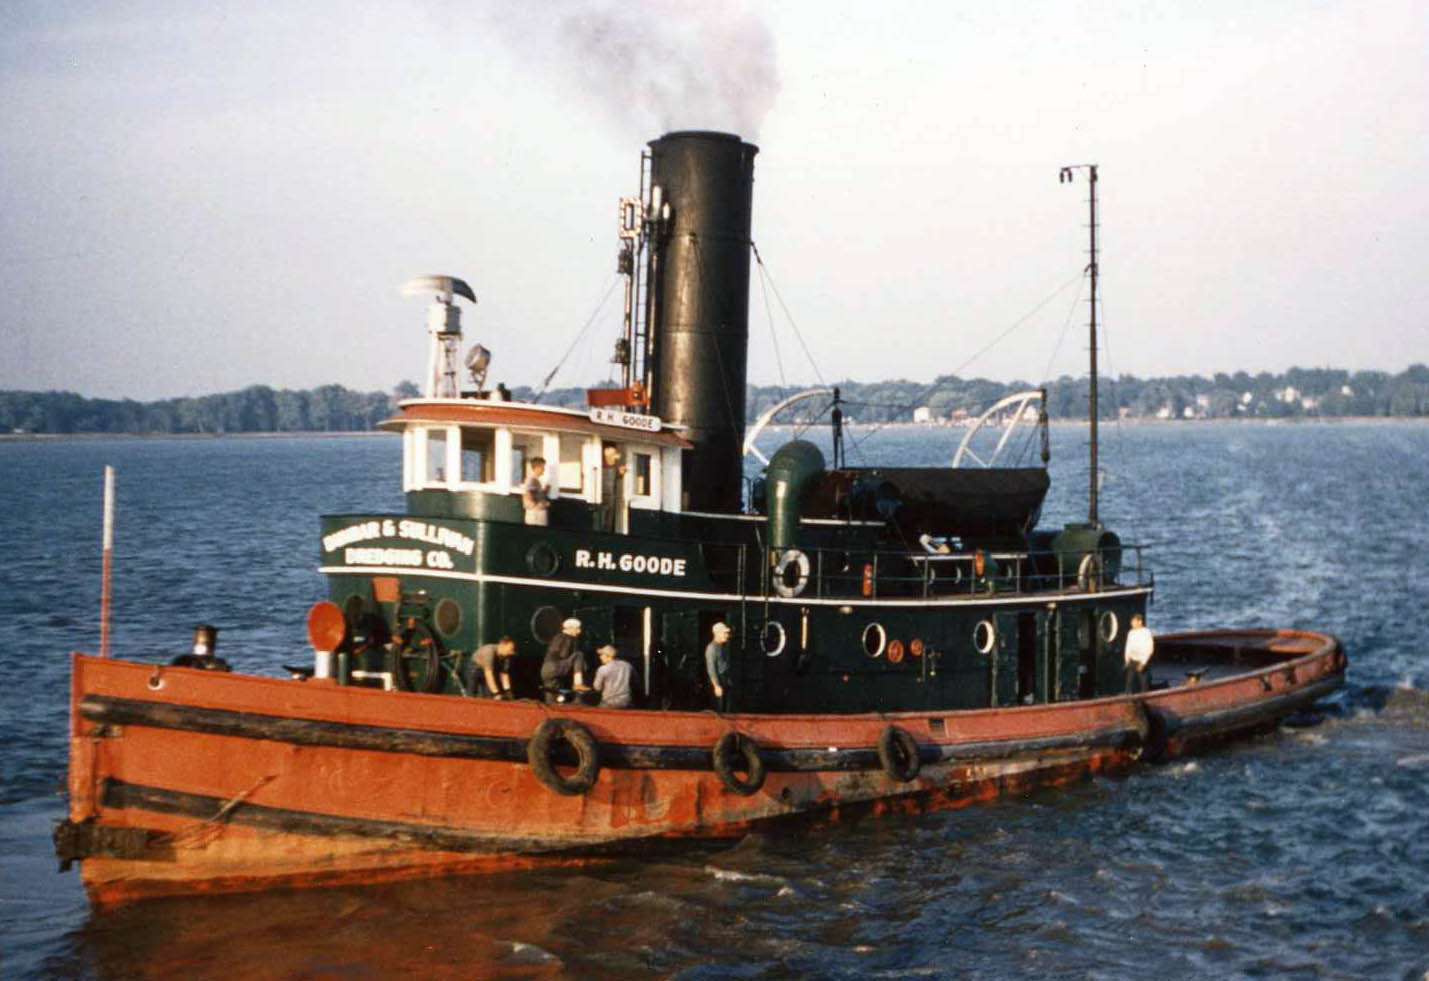 Tug Boat R. H. Goode